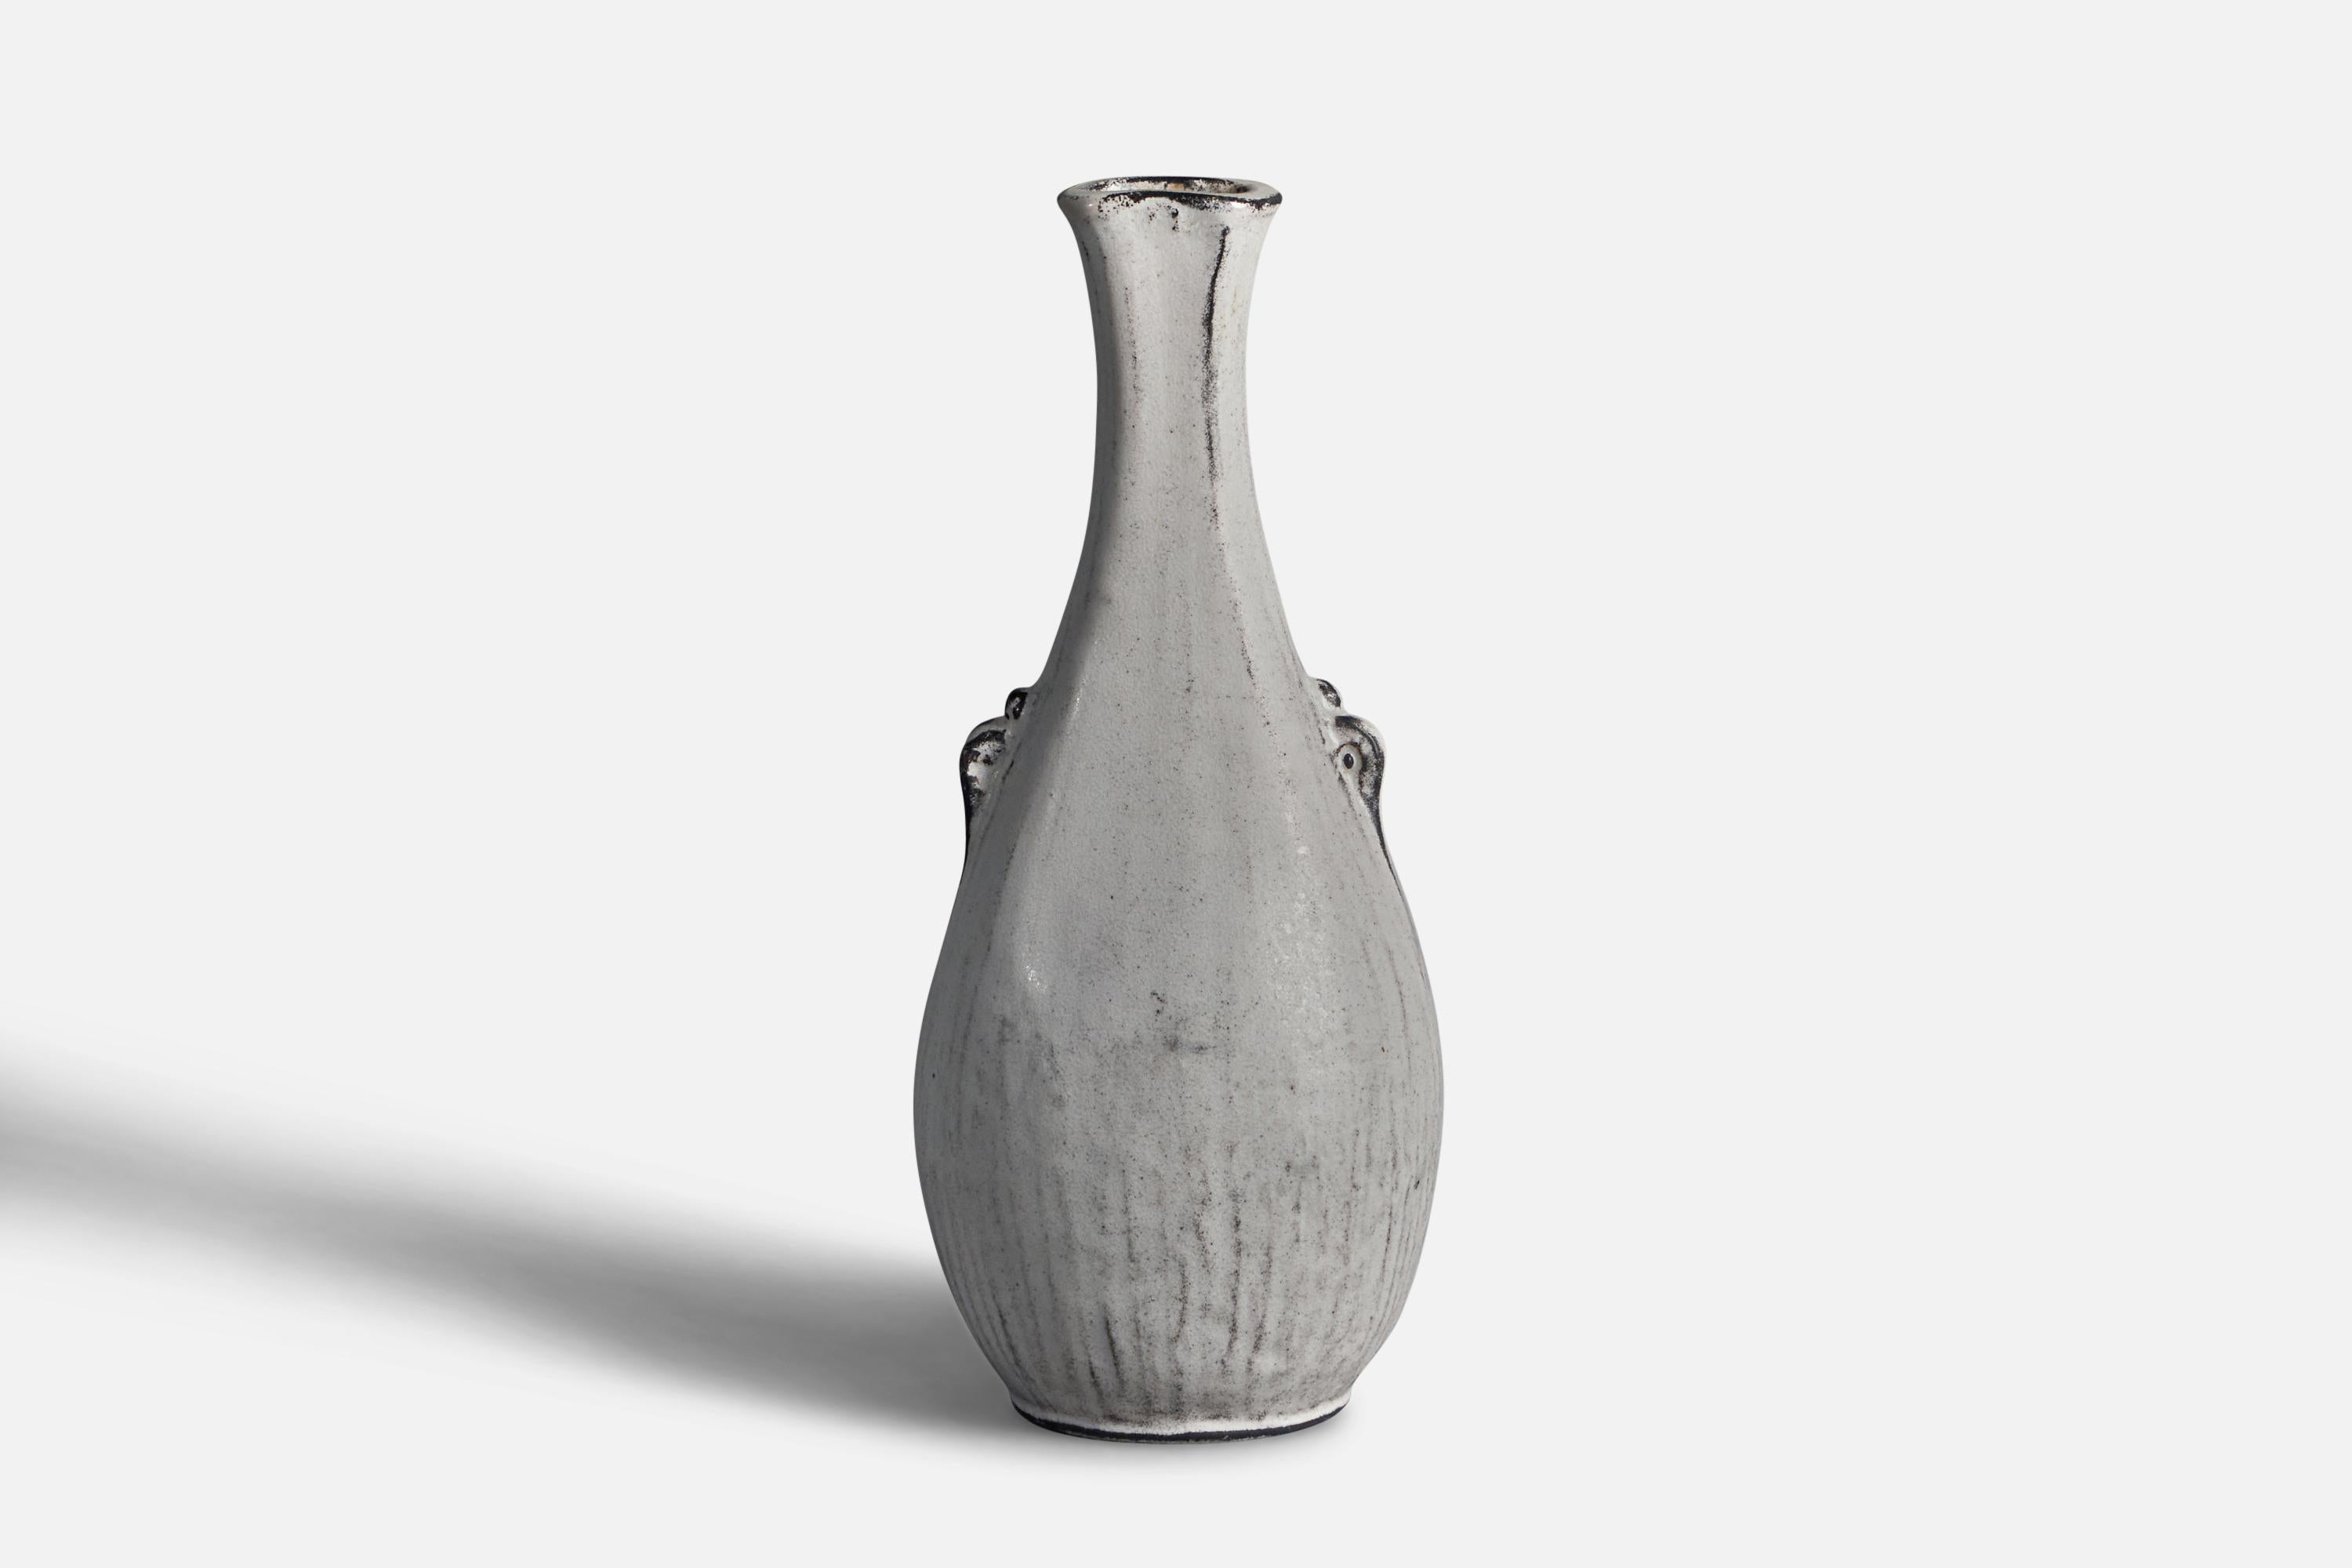 A white and black-glazed earthenware vase designed by Svend Hammershøi and produced by Herman A. Kähler Keramik, Denmark, c. 1930s.